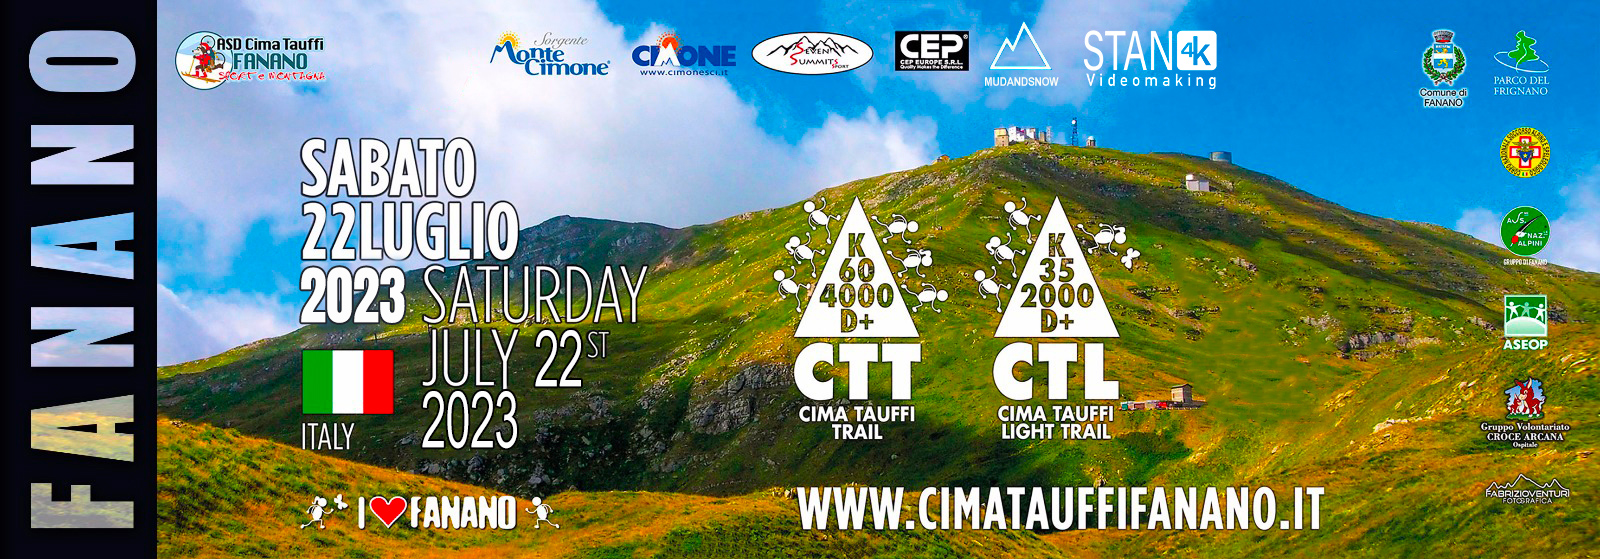 Cima Tauffi Trail 2023